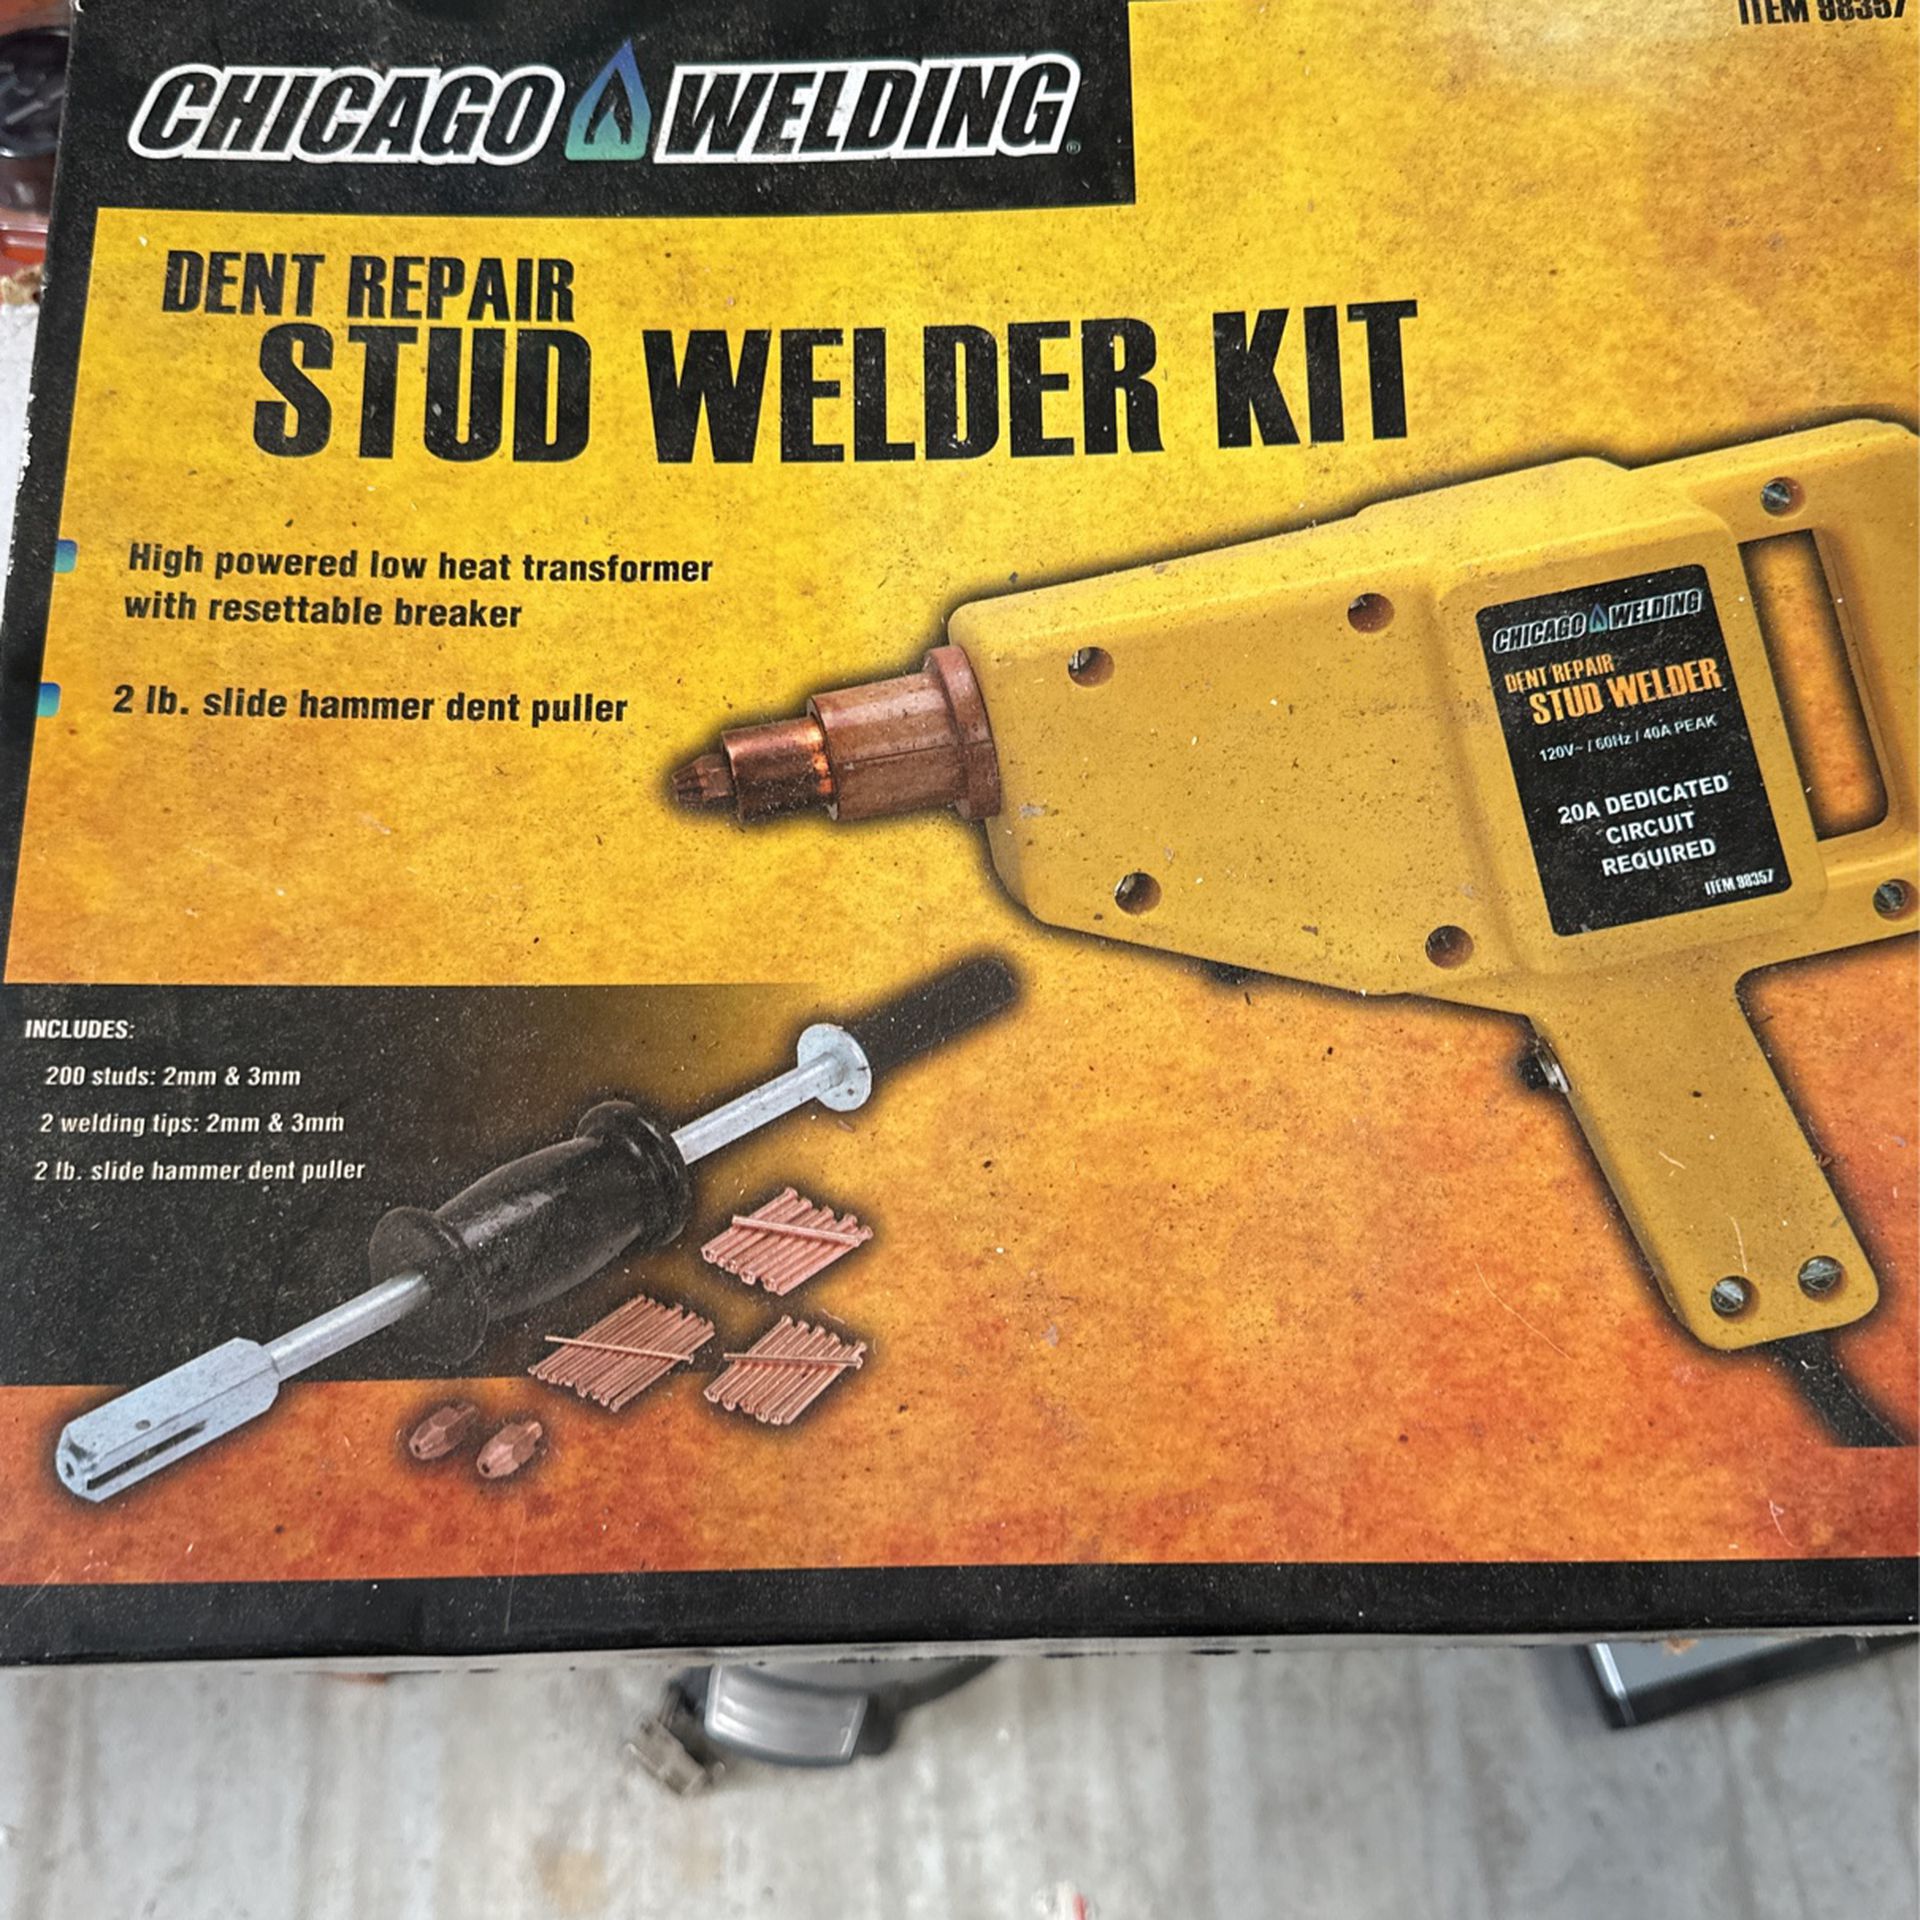 Stud welding Kit